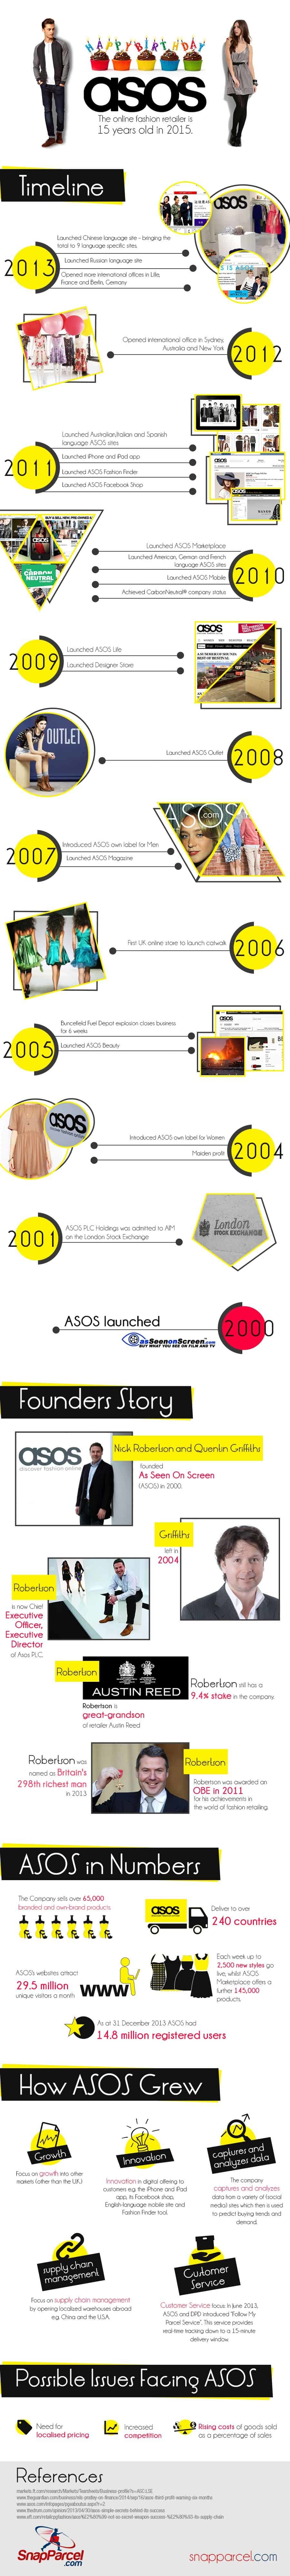 ASOS Infographic